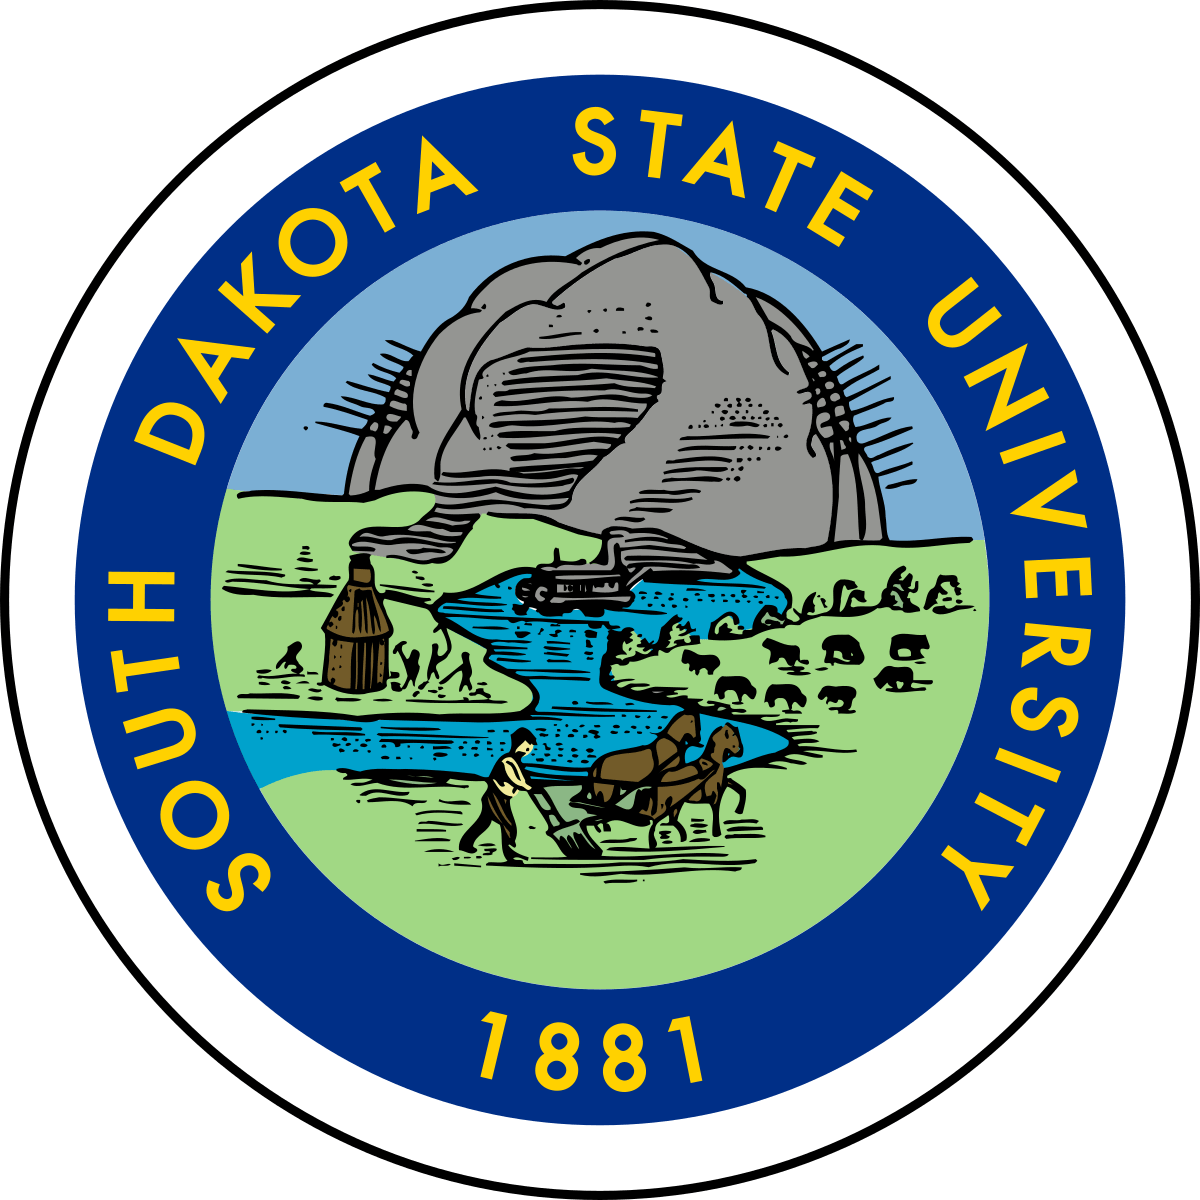 South Dakota State Logo - South Dakota State University